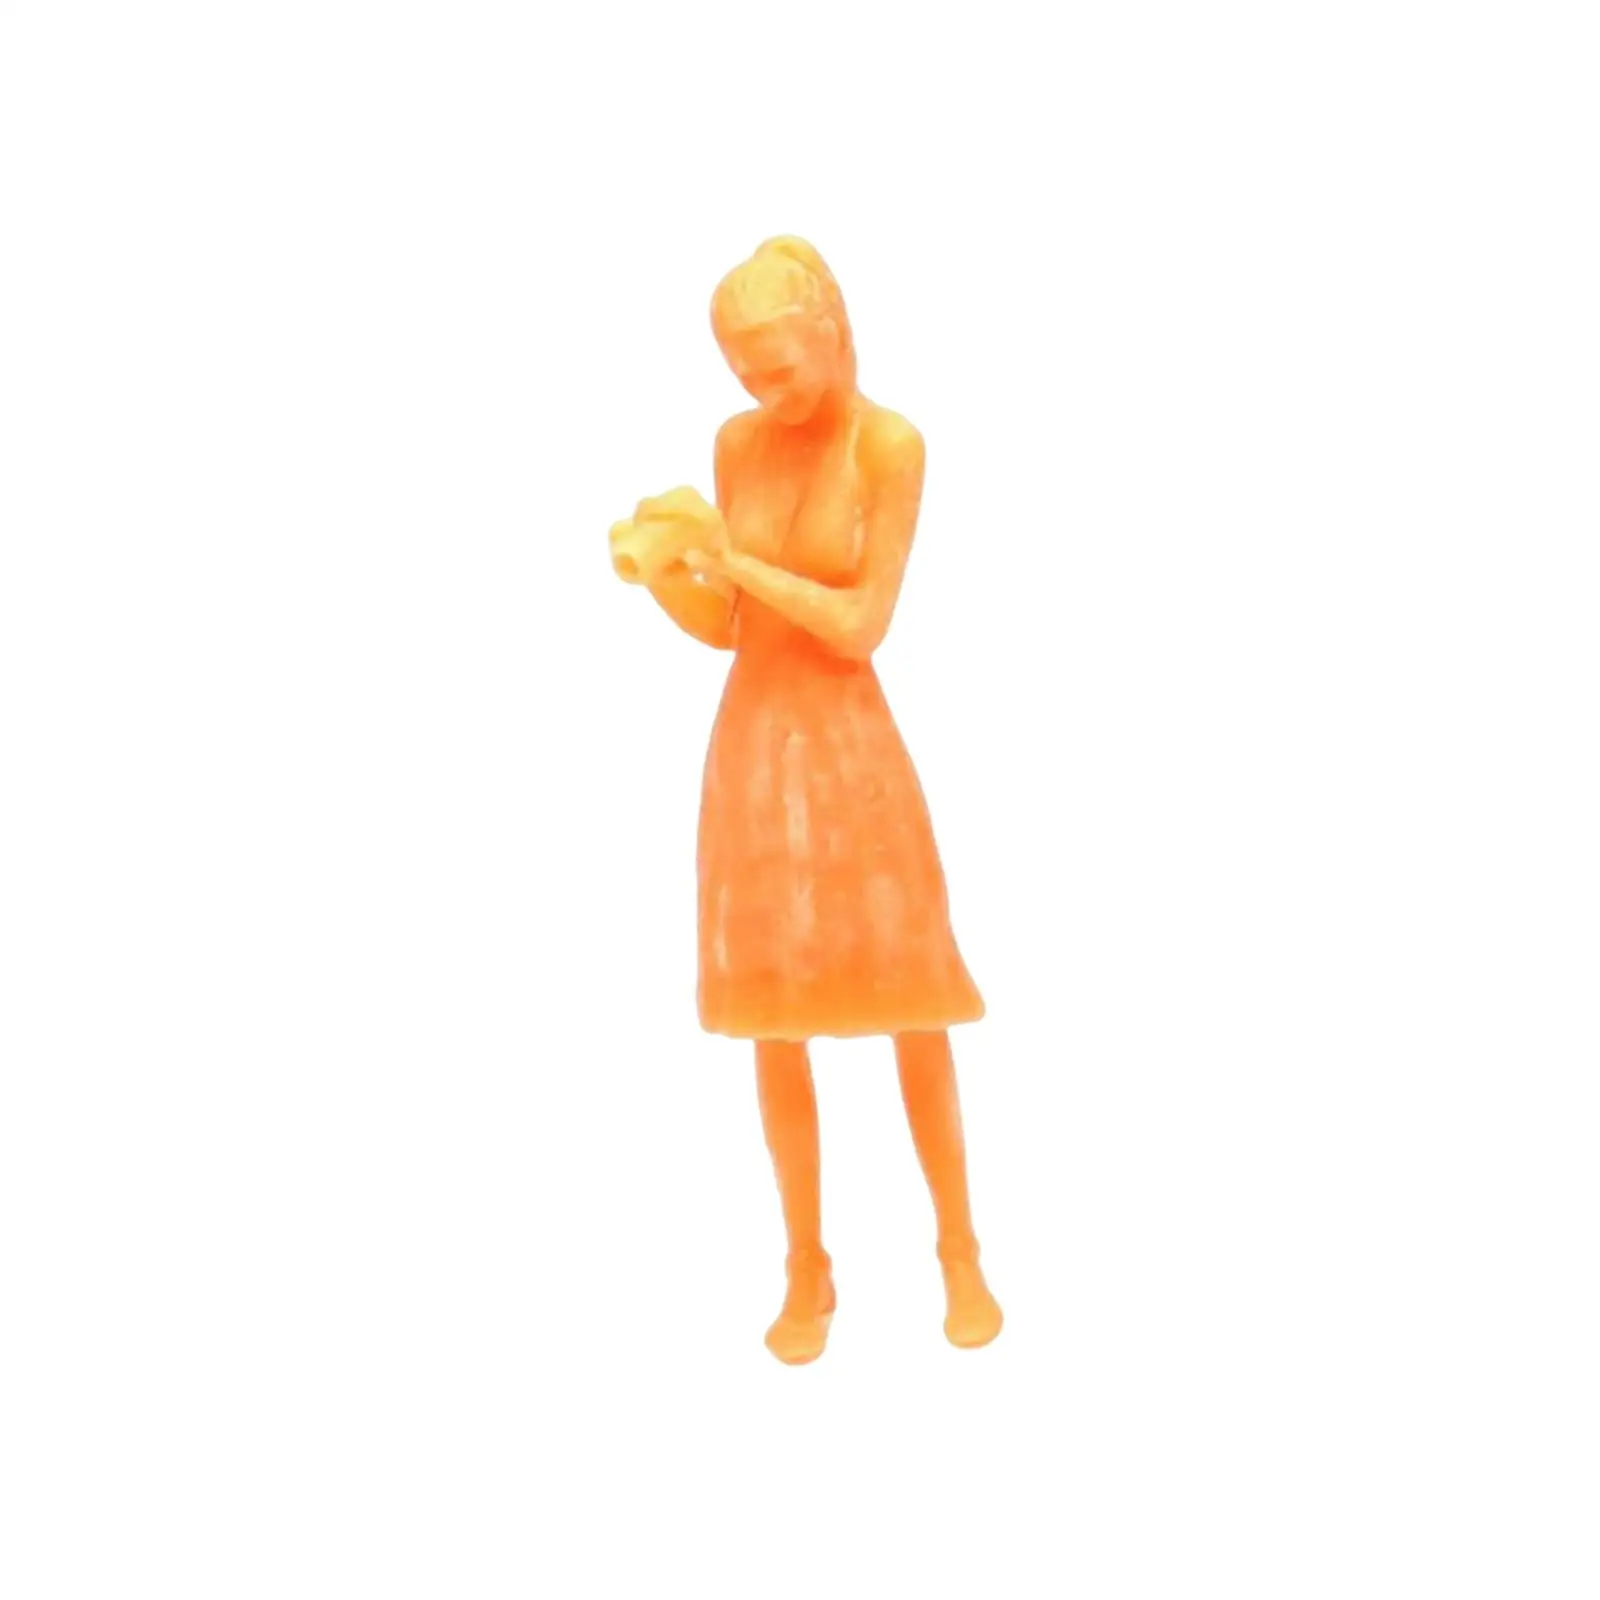 1/64 Scale Miniature Model Figures Movie Props 1/64 Scale Figures Dollhouse Decor DIY Projects Accessory Micro Landscapes Decor